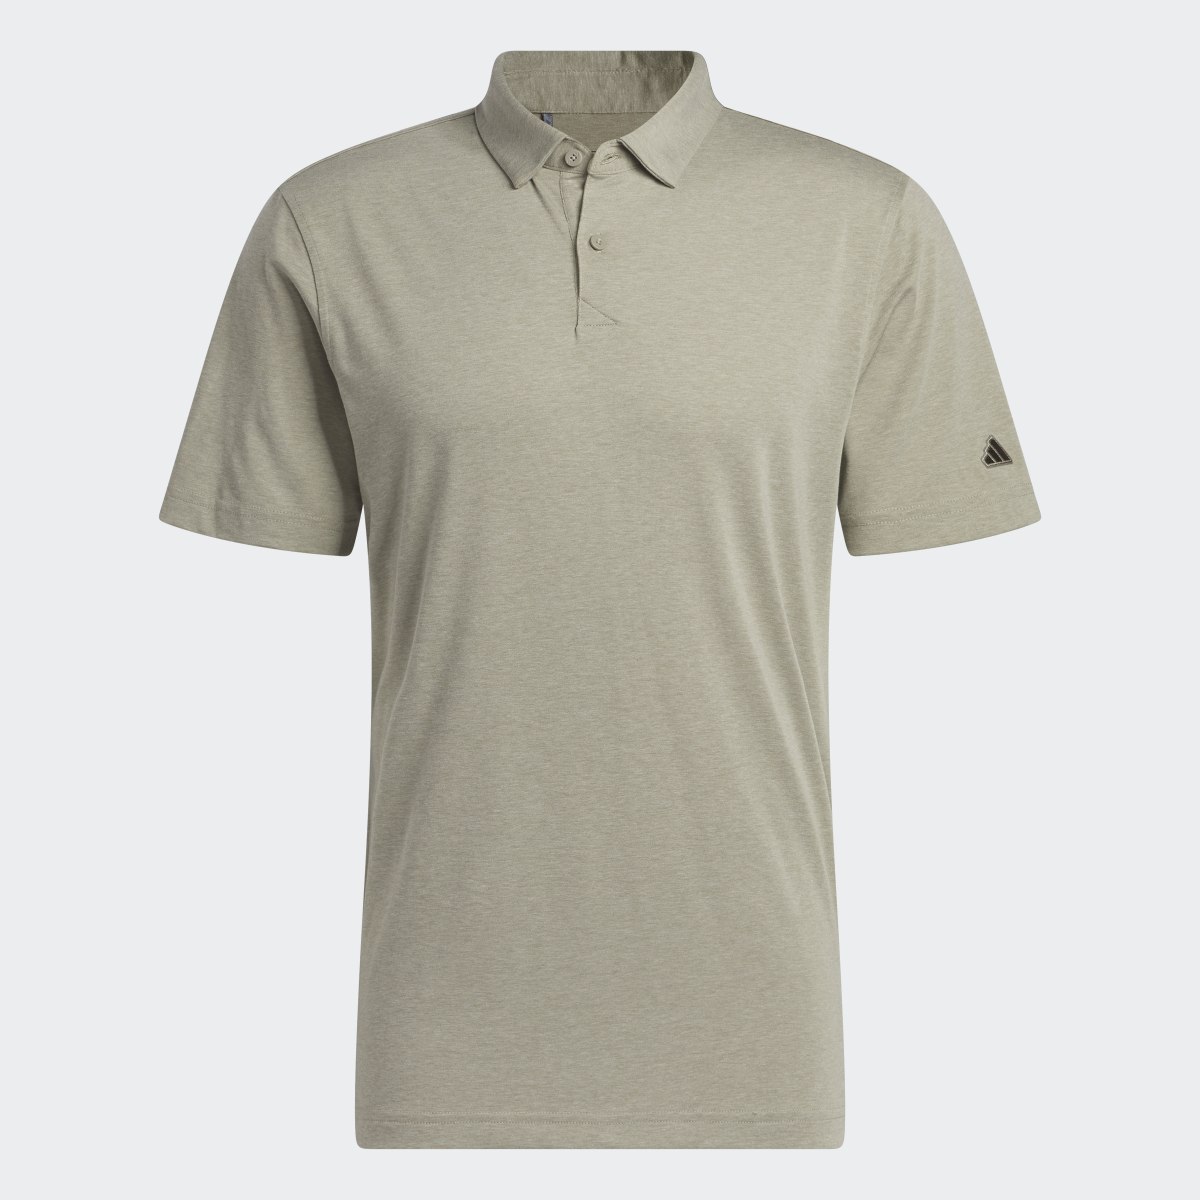 Adidas Go-To Golf Polo Shirt. 5